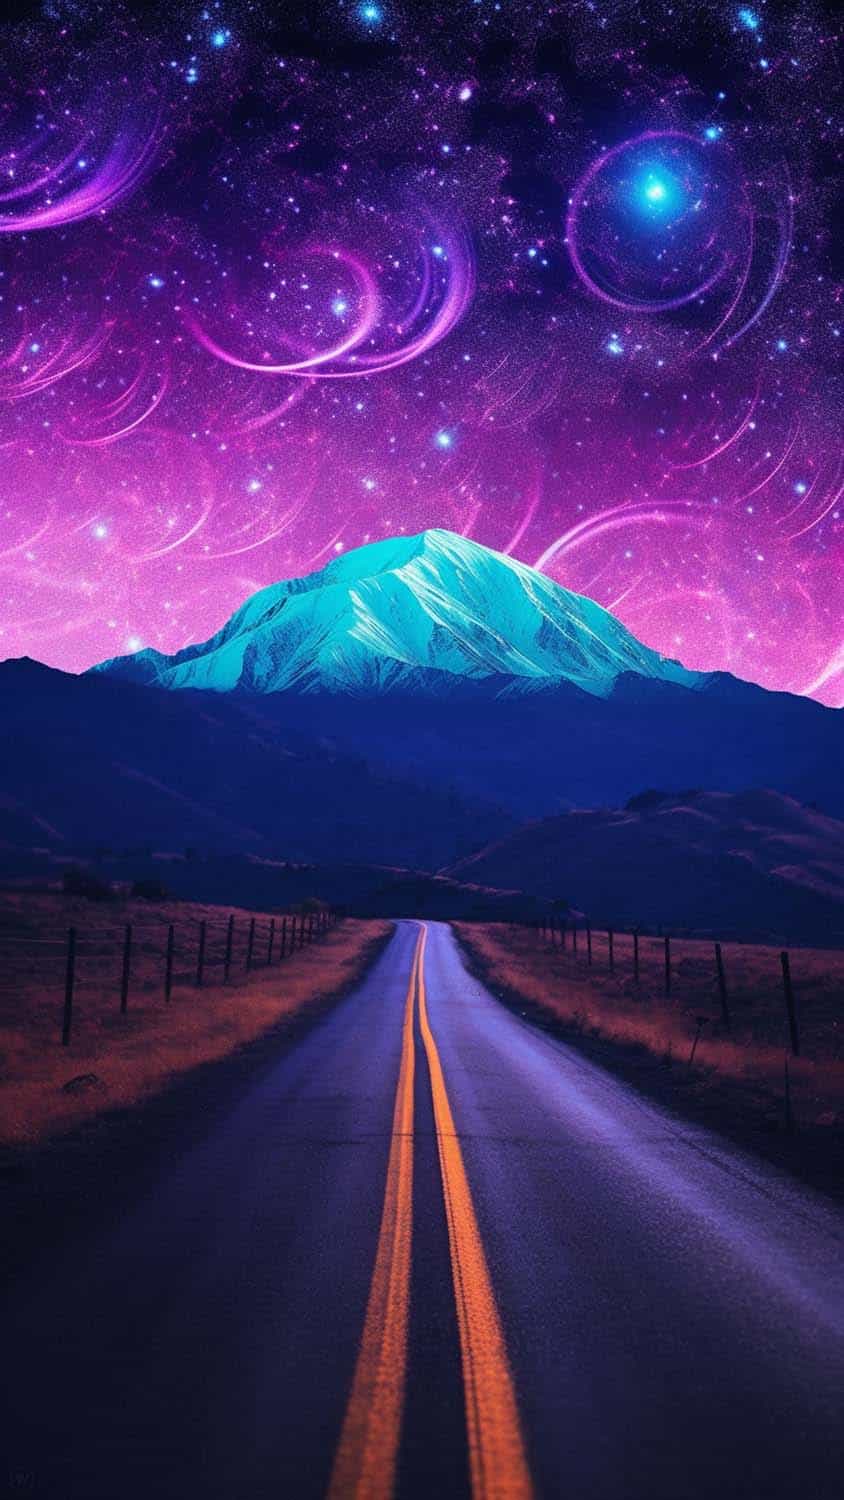 Magical Sky Mountain Road iPhone Wallpaper 4K